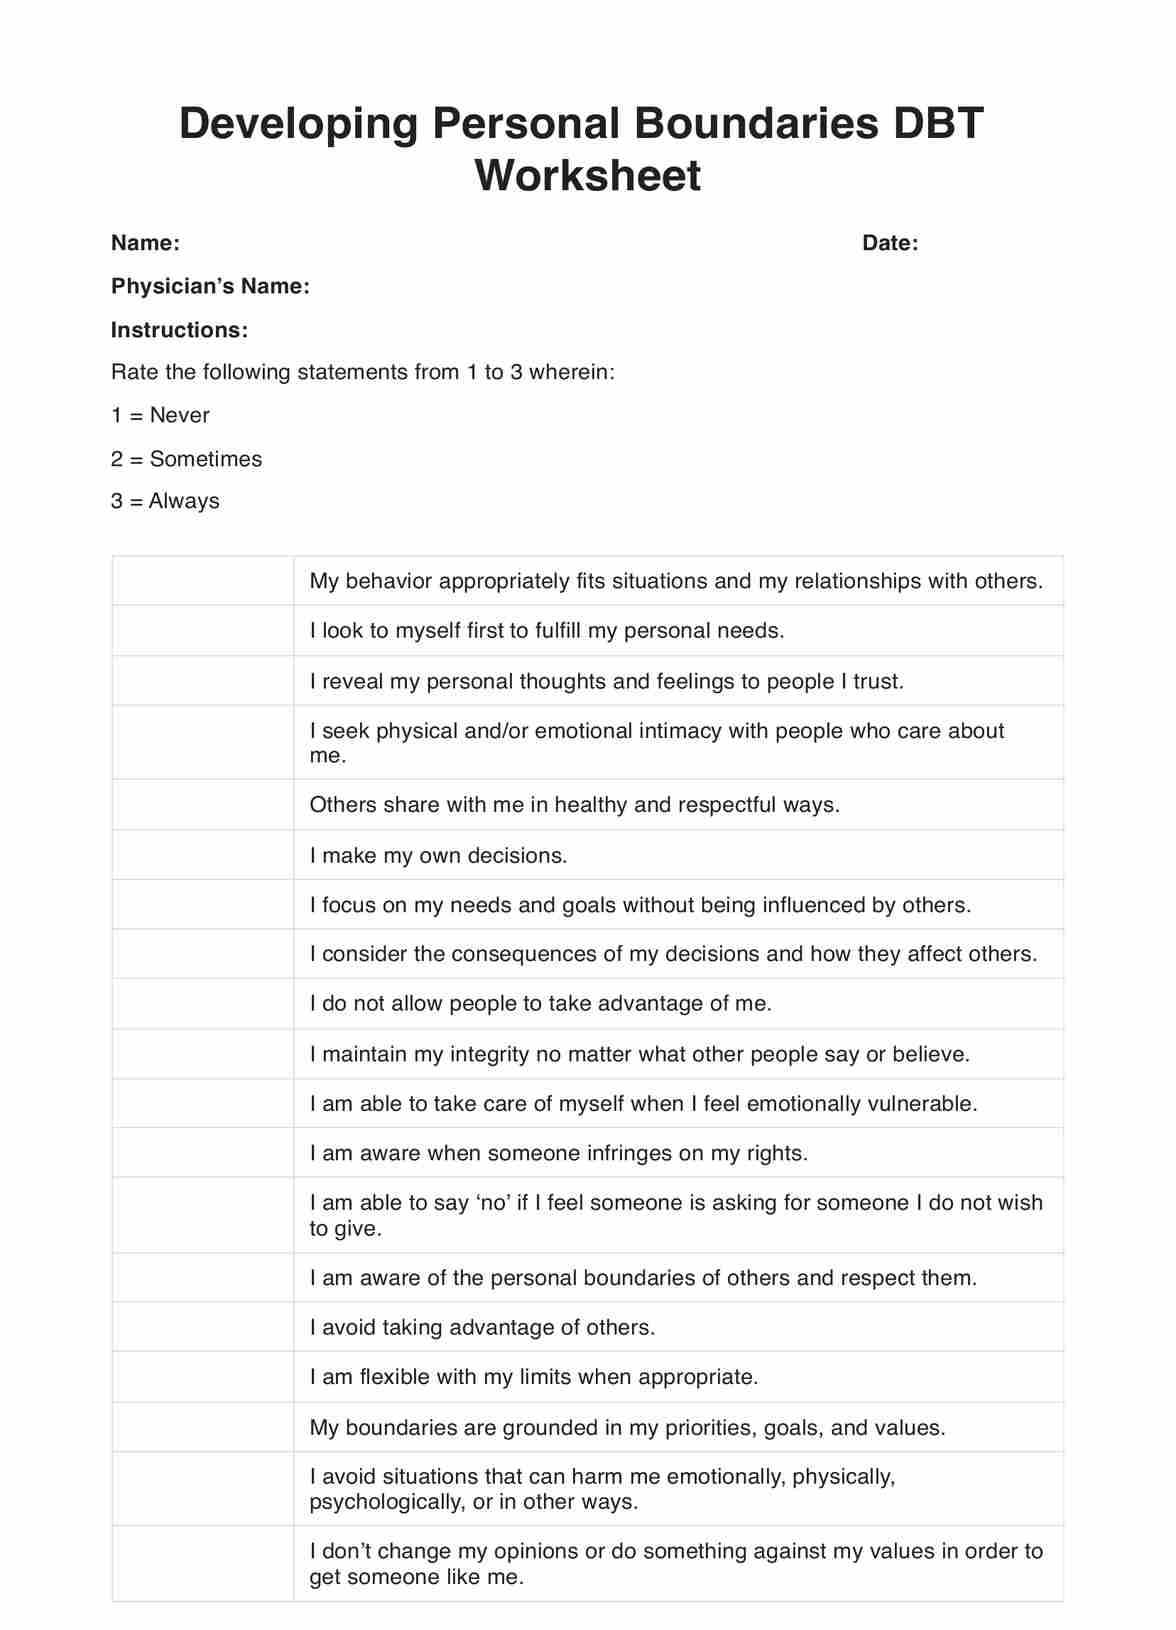 Developing Personal Boundaries DBT Worksheets PDF Example